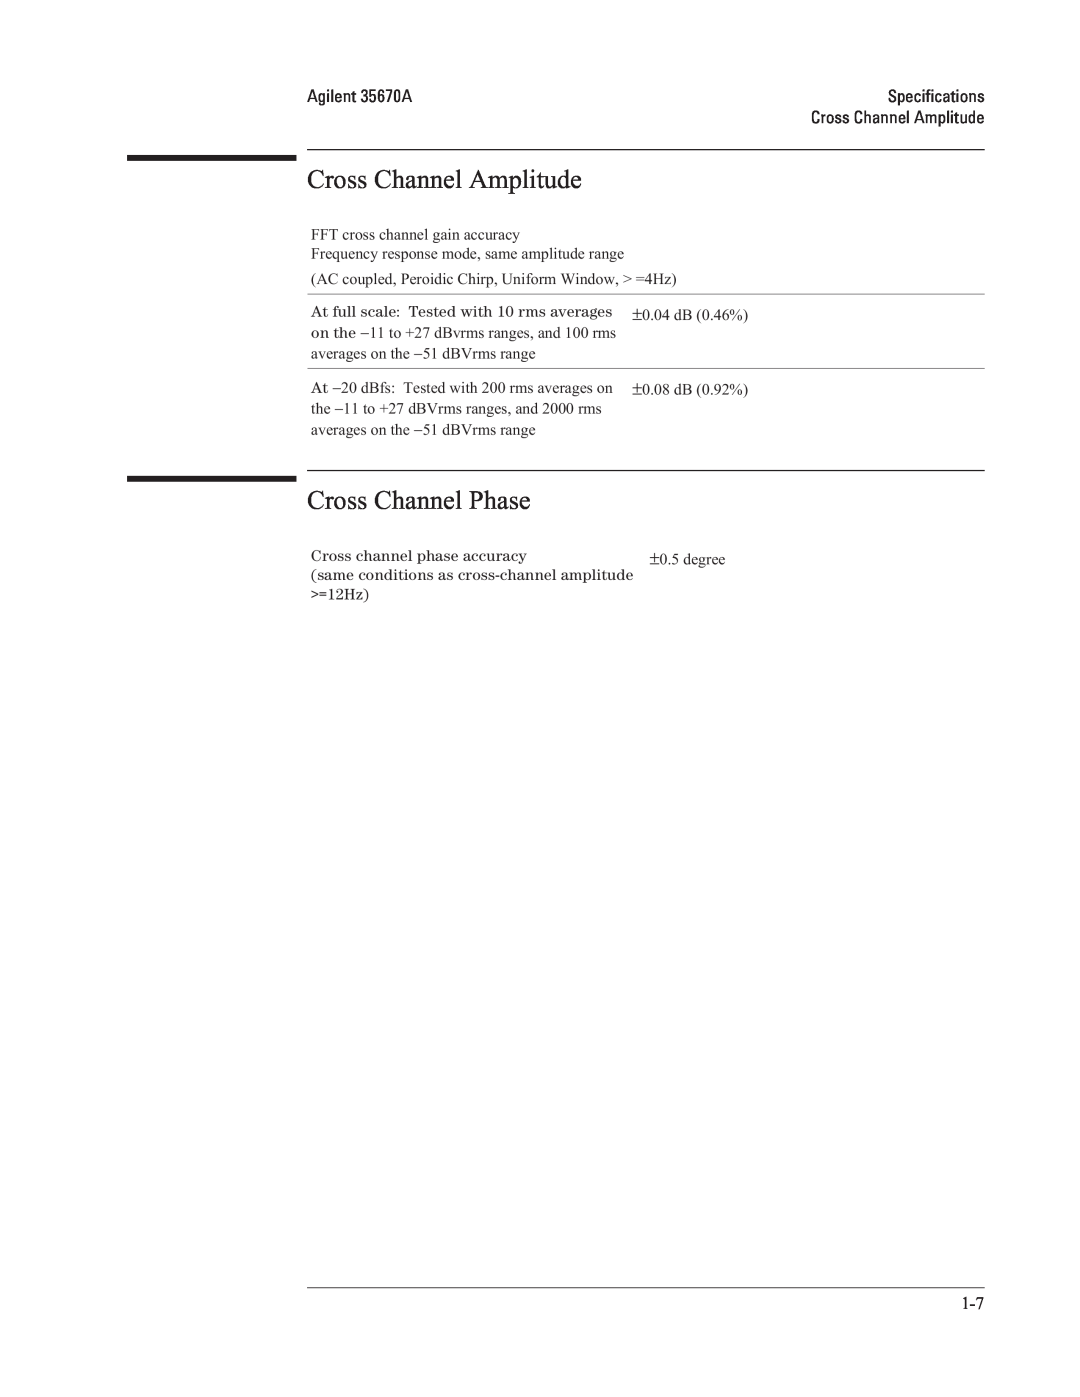 Agilent Technologies 35670-90066 manual Cross Channel Amplitude, Cross Channel Phase, Agilent 35670A, Specifications 